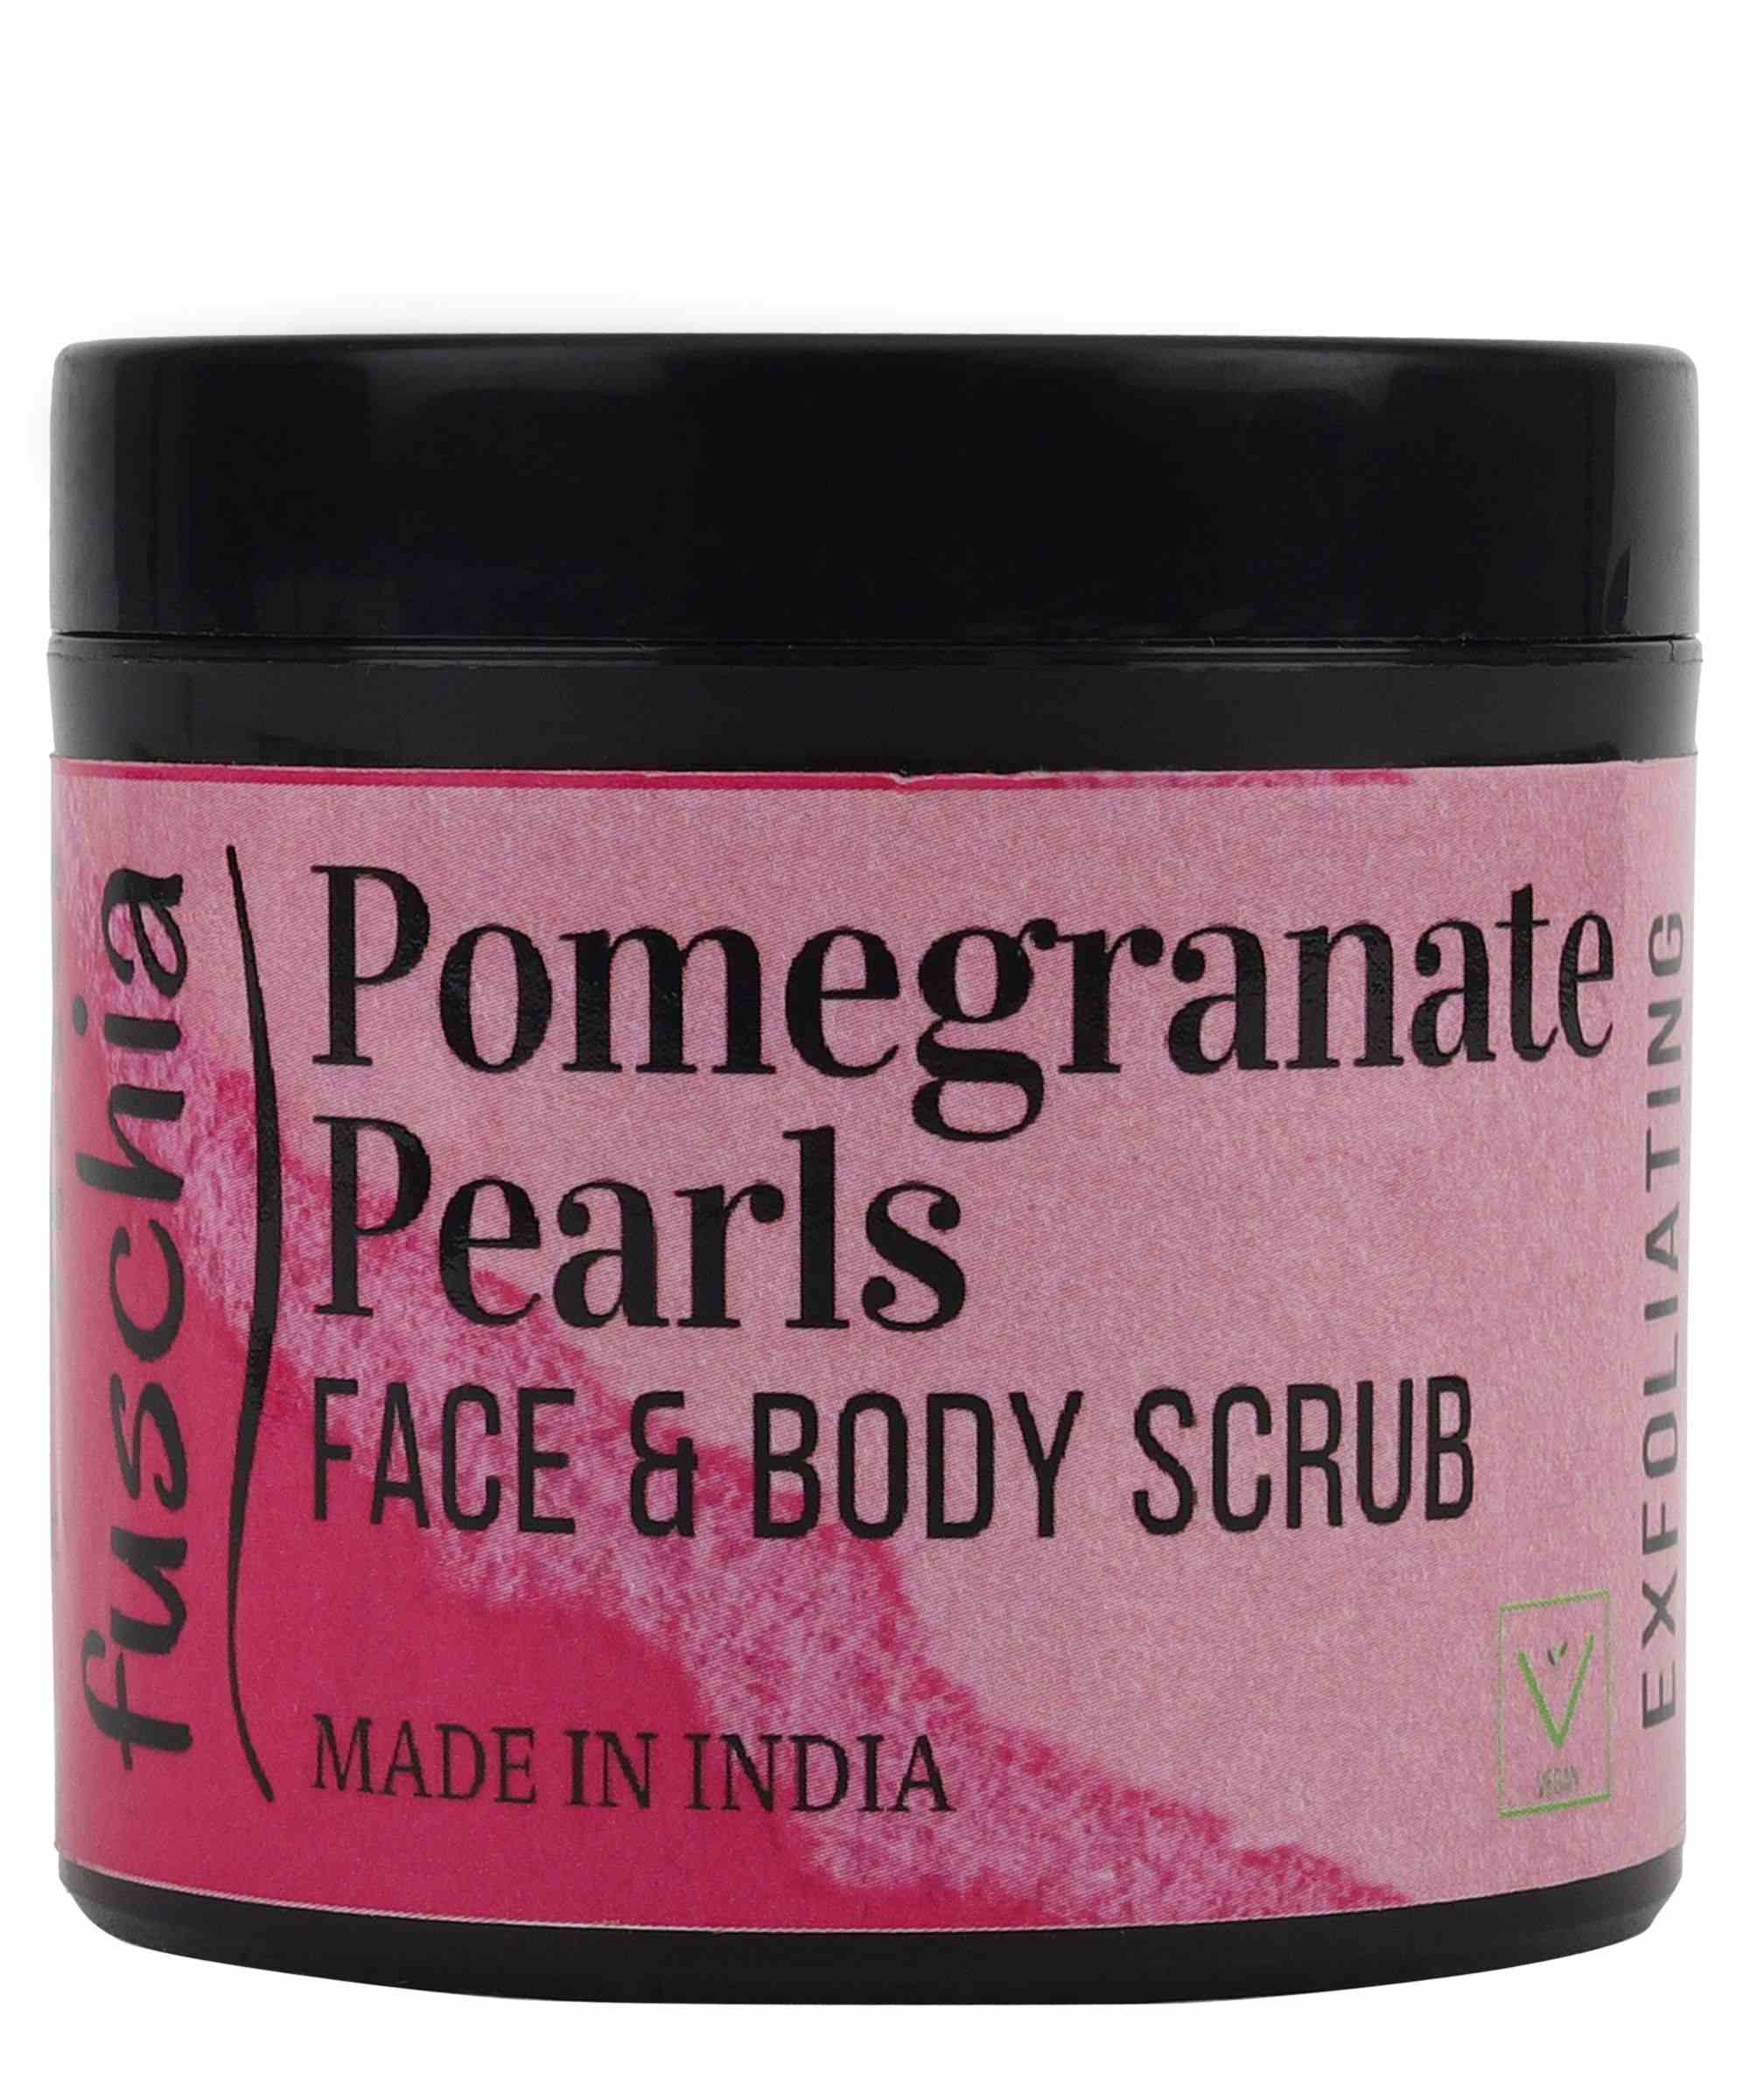 fuschia-pomegranate-pearl-face-body-exfoliating-scrub-100g